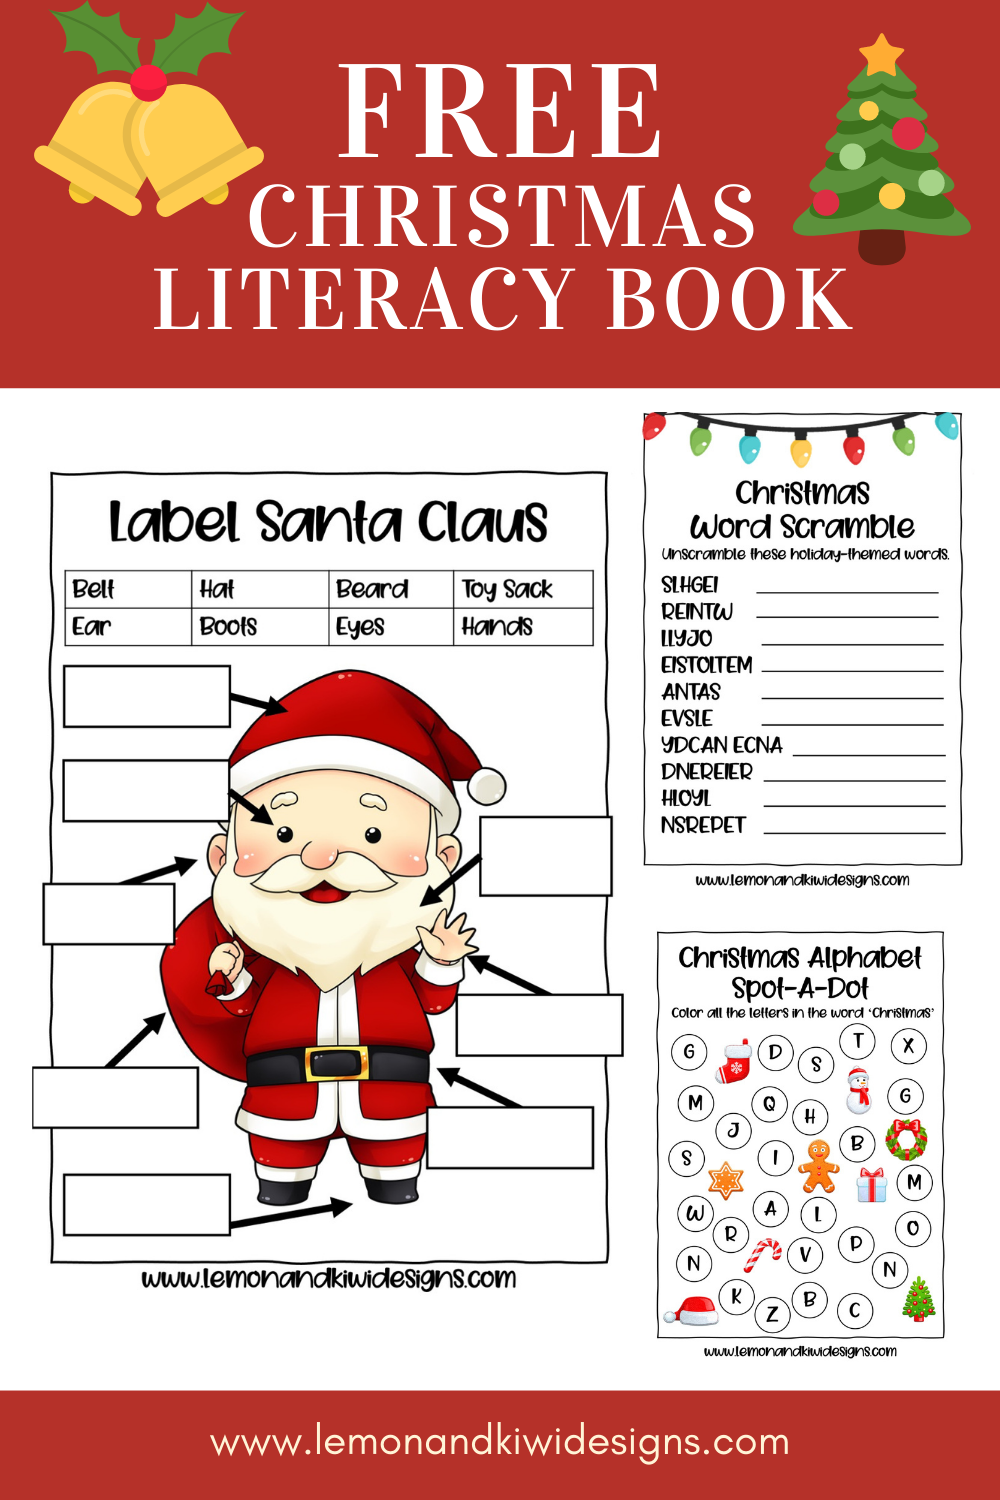 Free Christmas Literacy Printable Activity Book